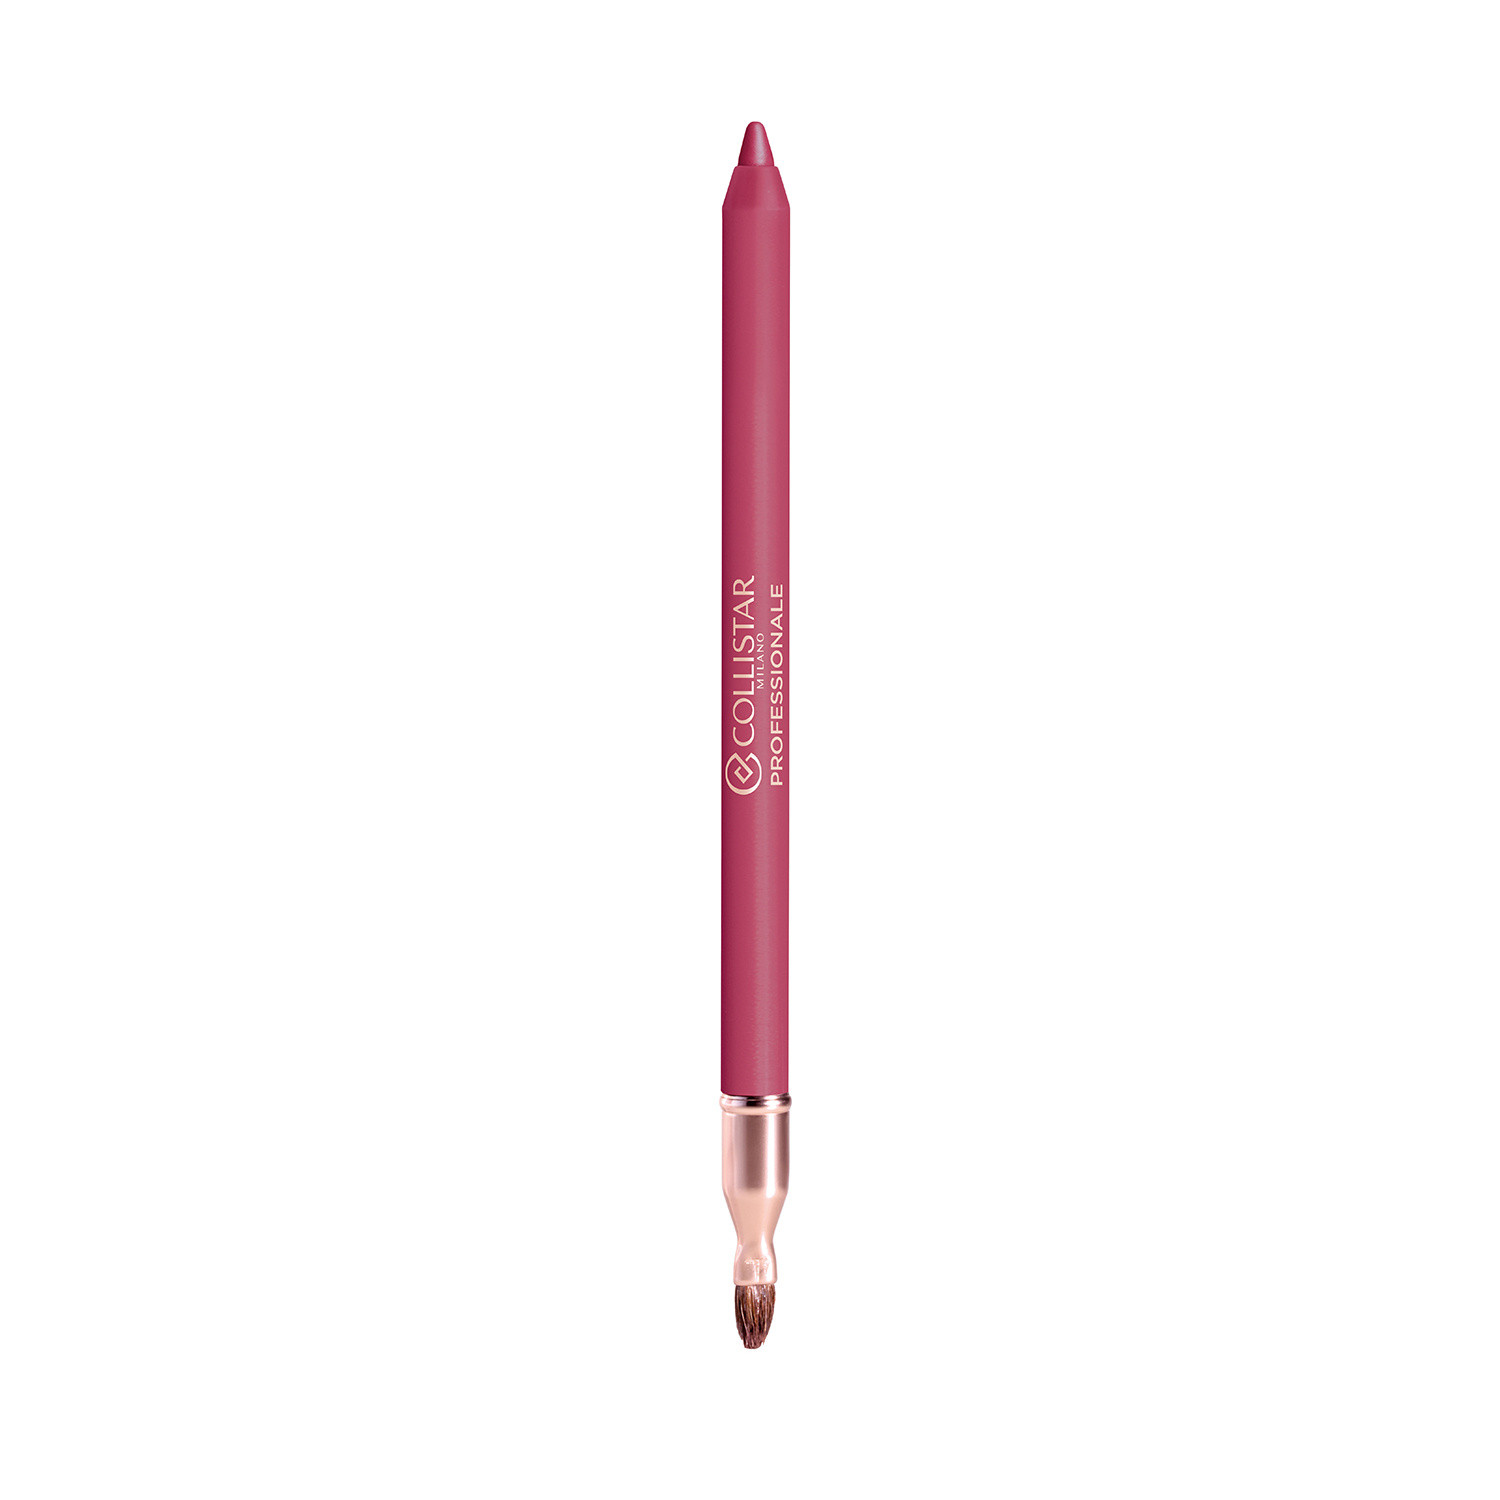 Collistar - Professional long lasting lip pencil - 113 Autumn Berry, Pink Flamingo, large image number 1